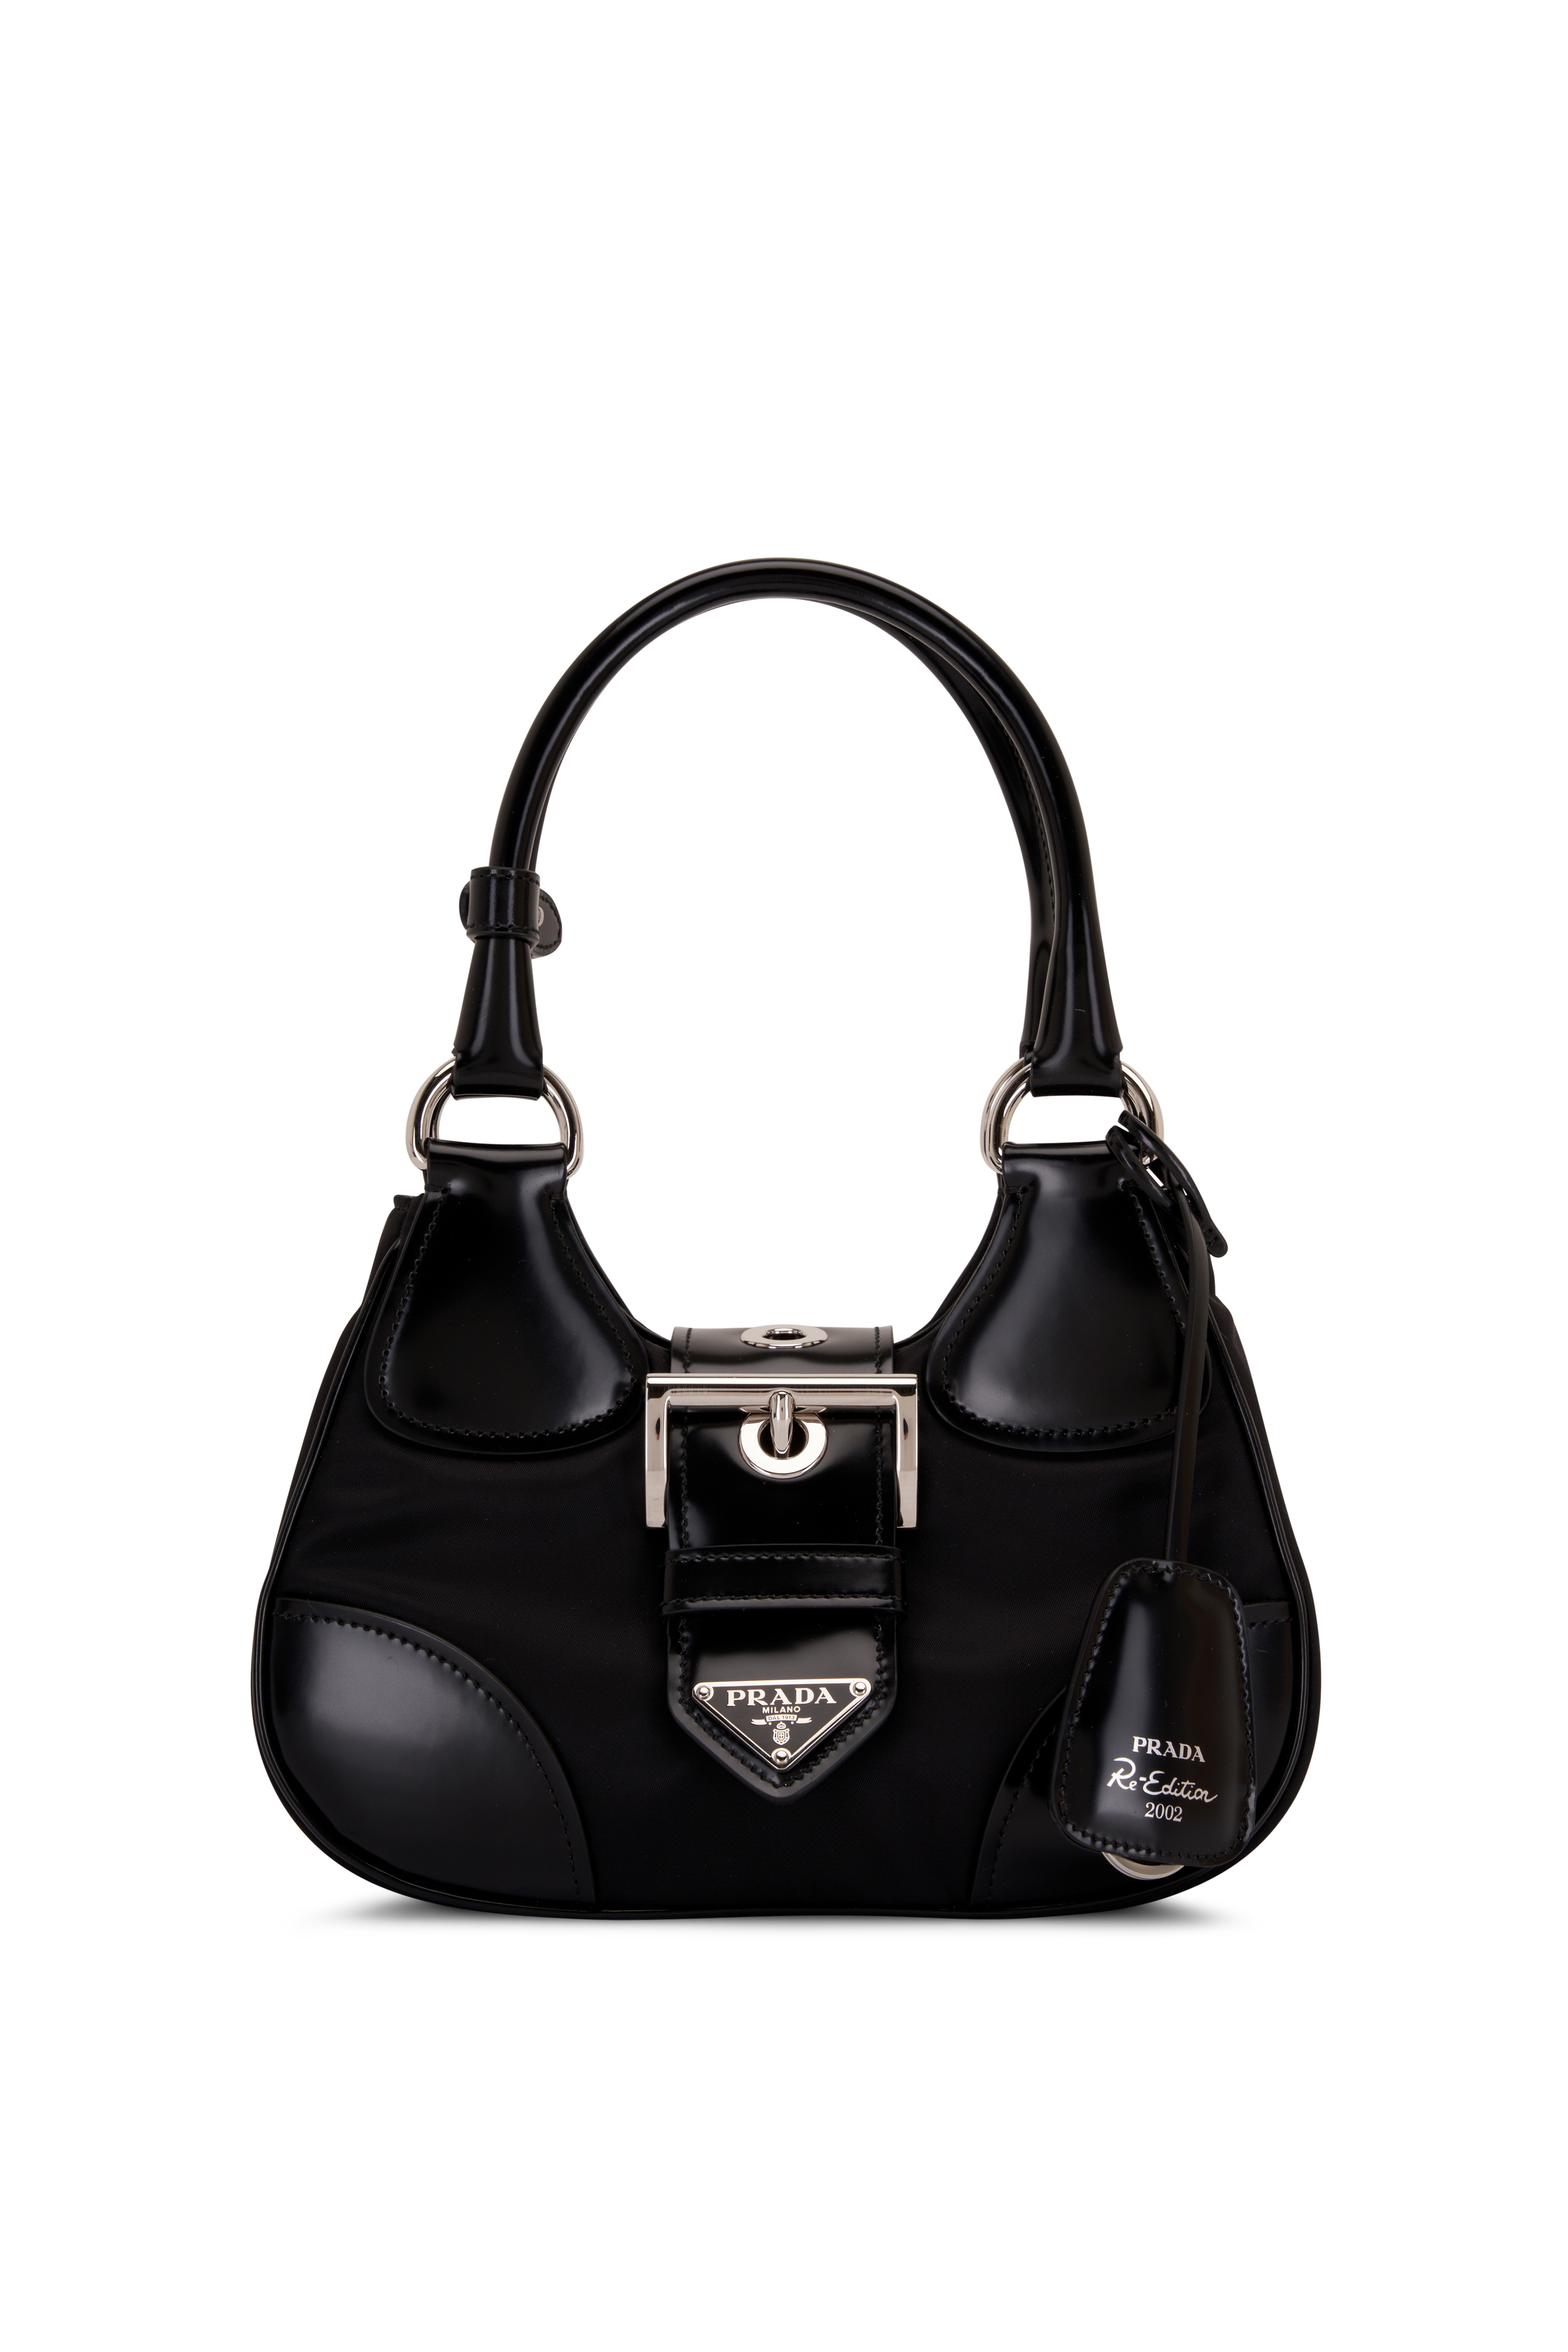 PRADA Saffiano Flap Shoulder Bag Black 1295787